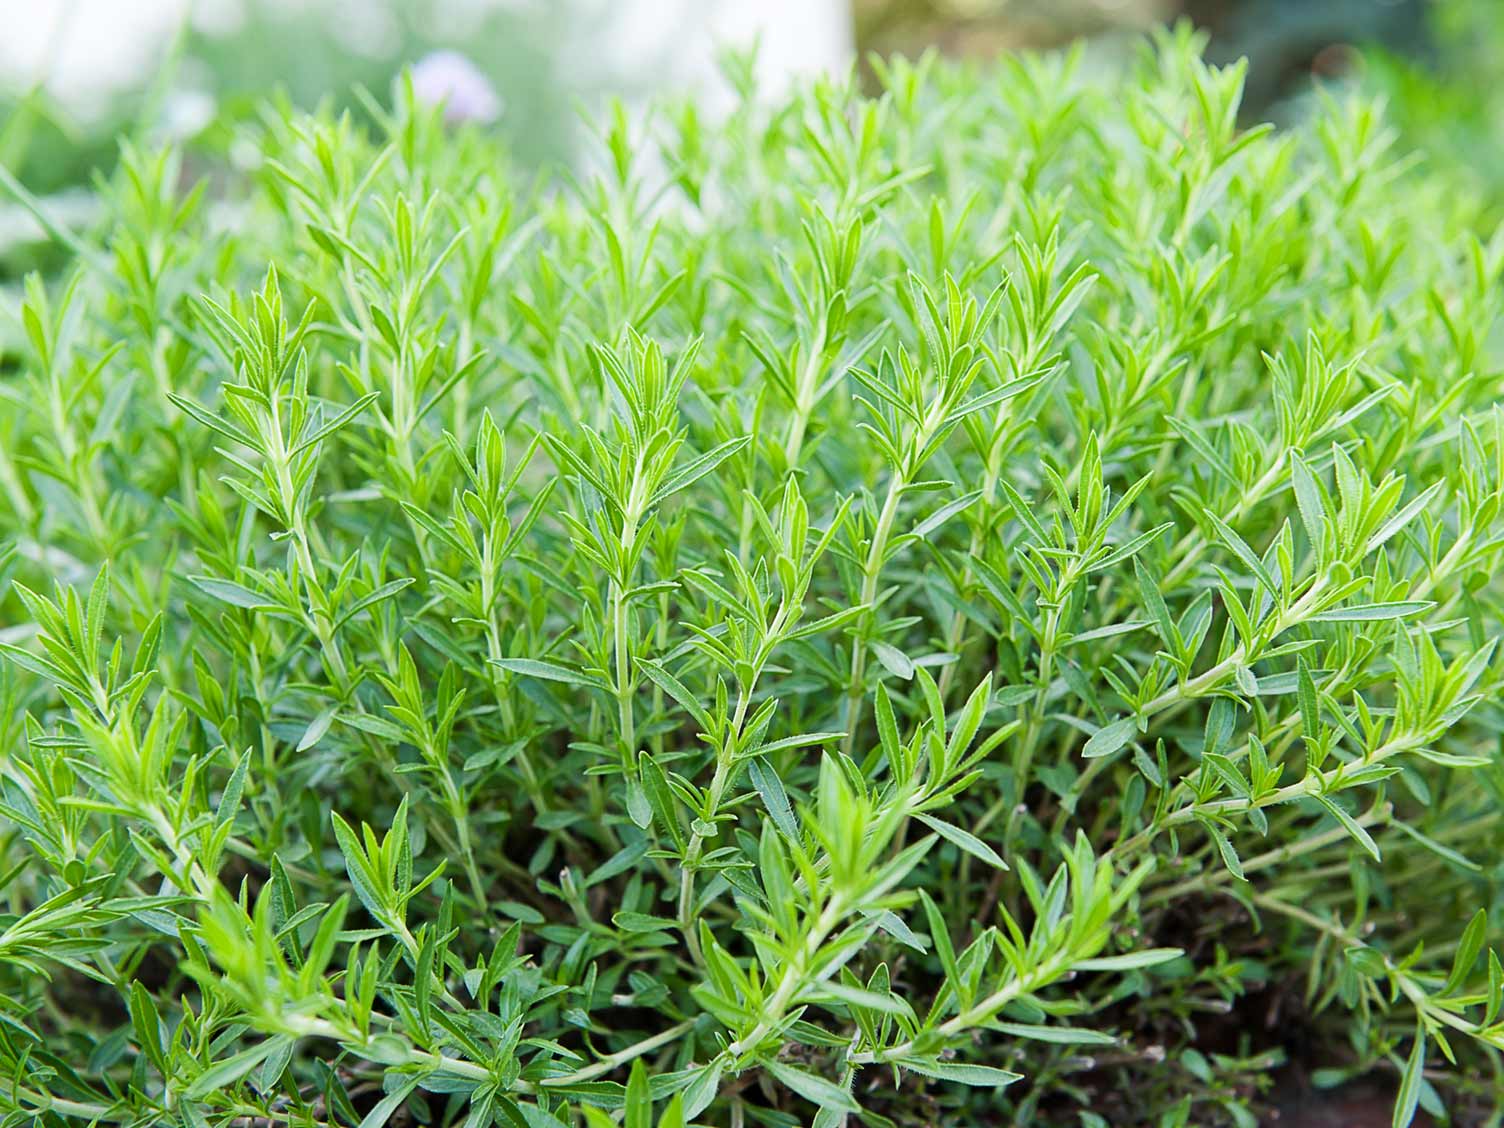 Tarragon herb